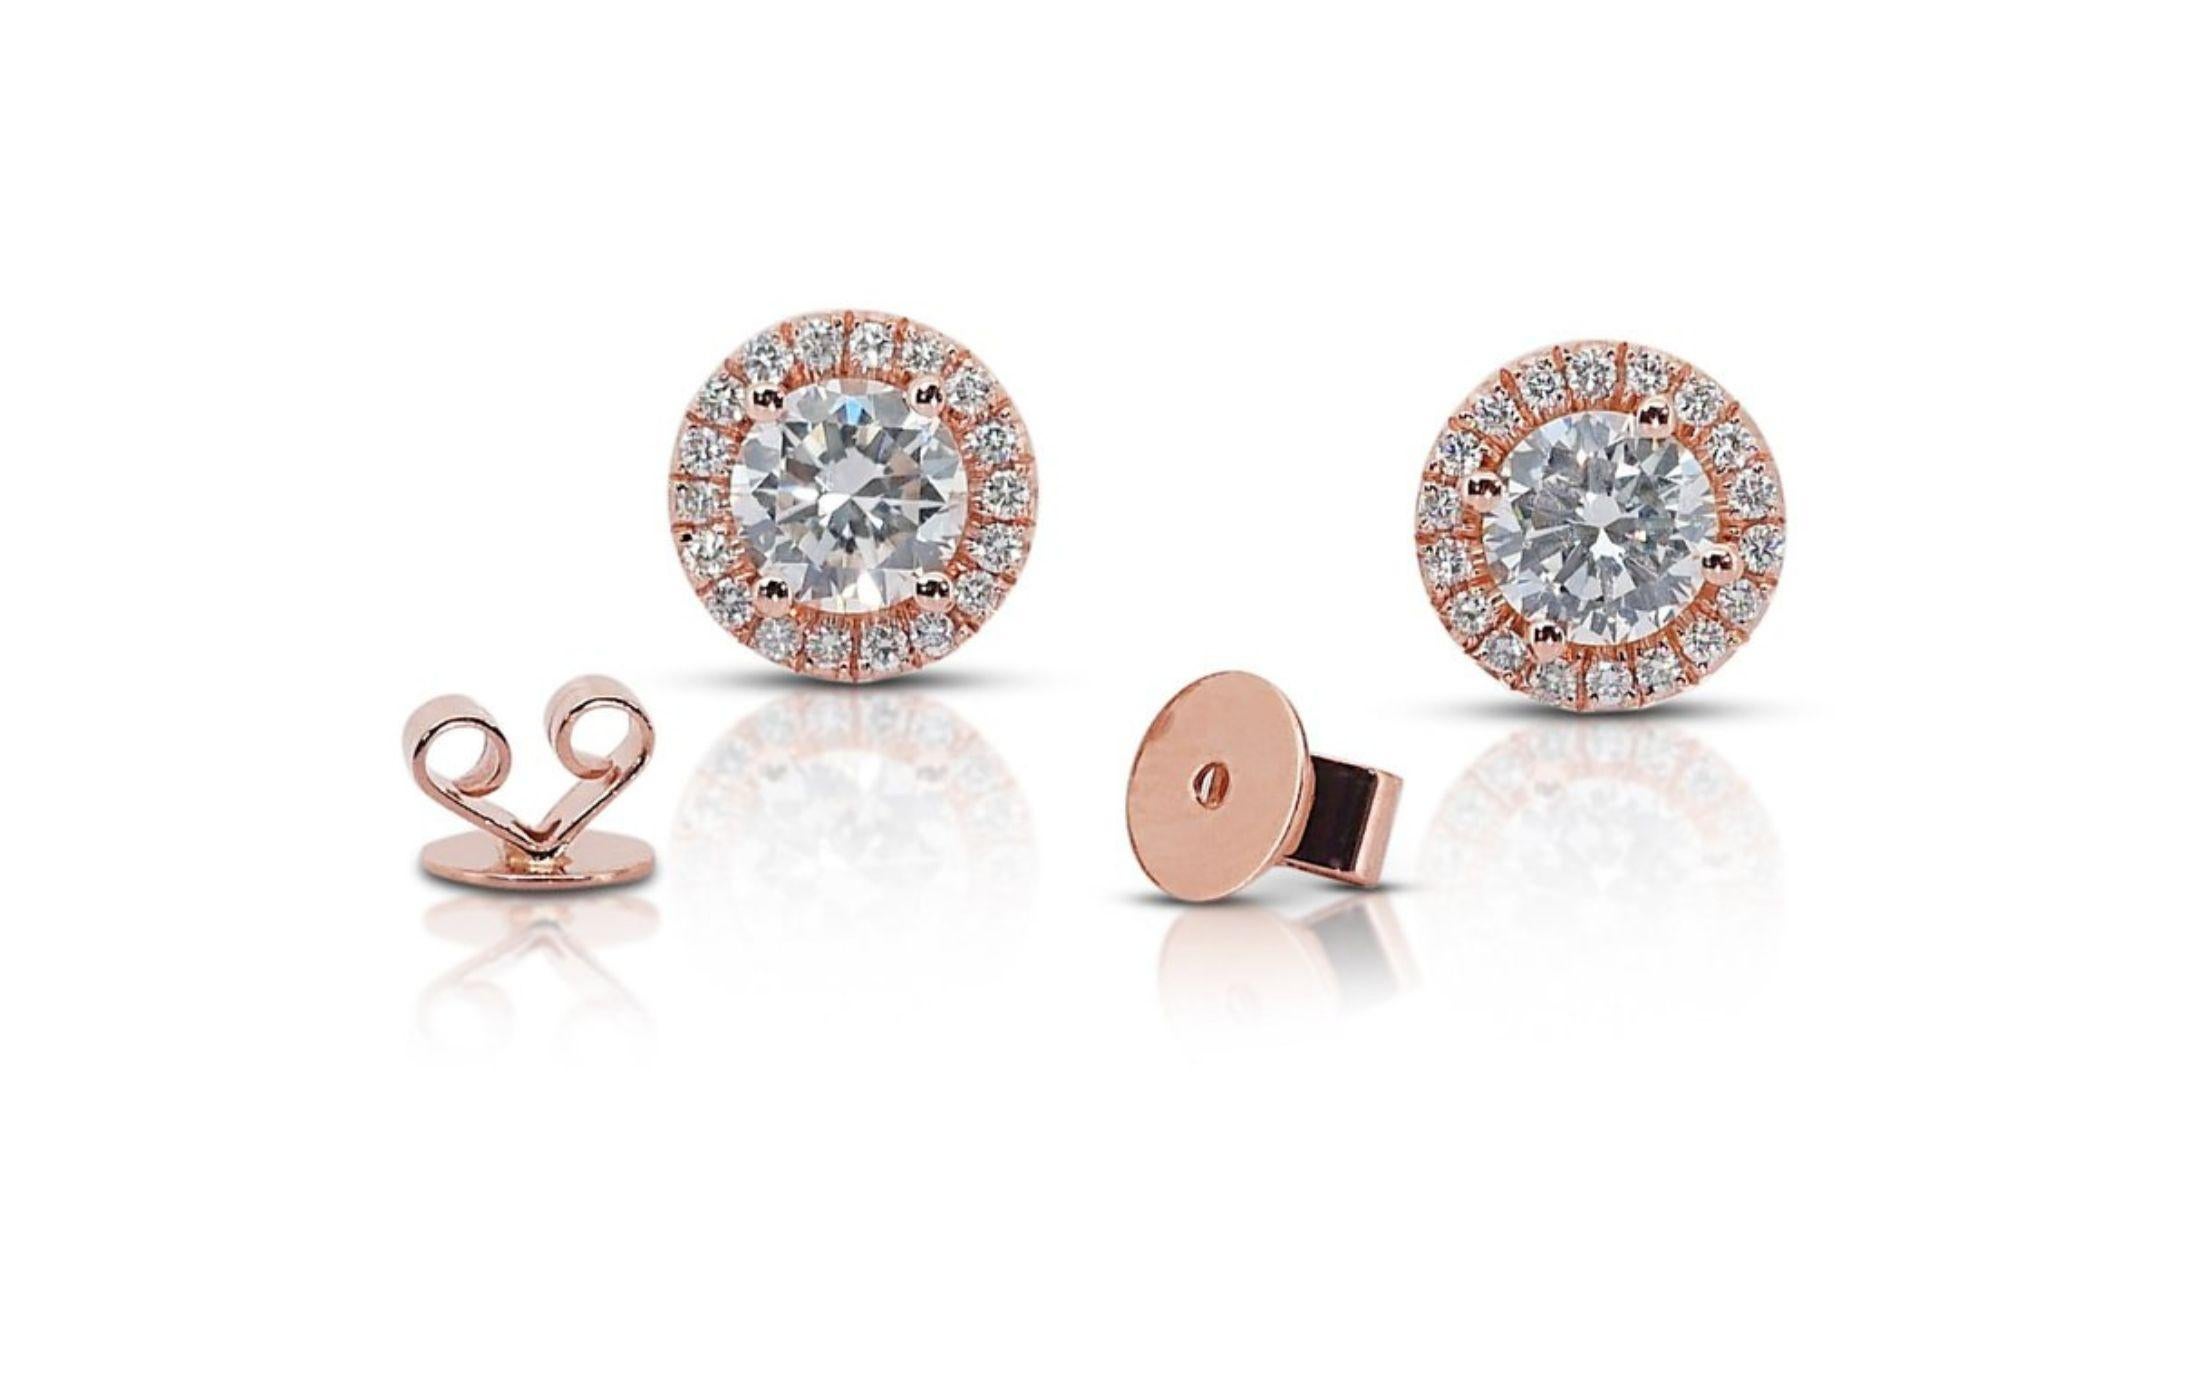 Stunning Diamond Earrings with 1.2 carat Round Brilliant Diamond For Sale 4